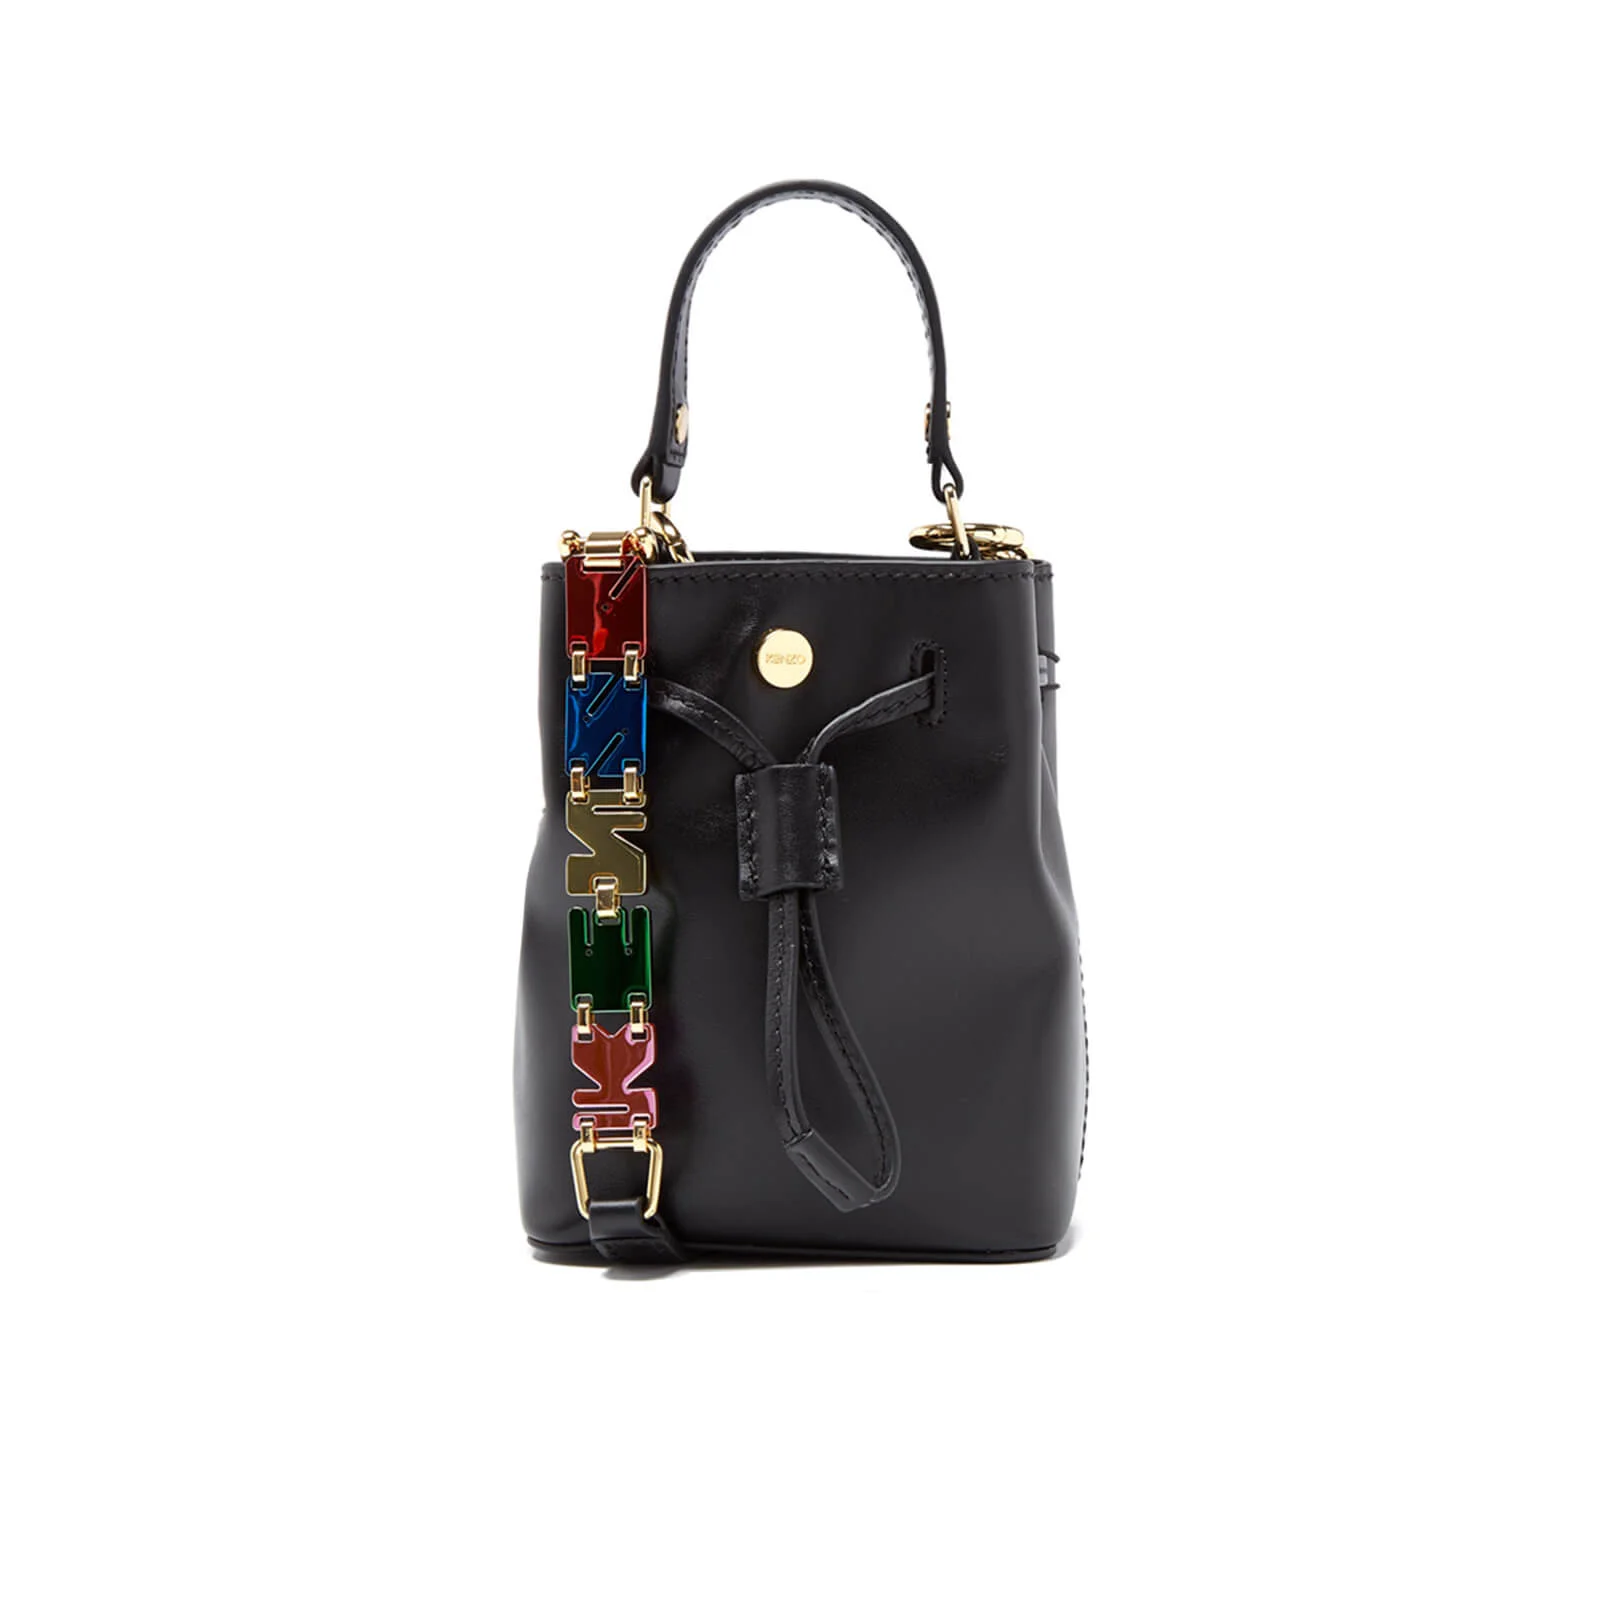 KENZO Women's Essentials Chainy Shoulder Bag - Black Image 1